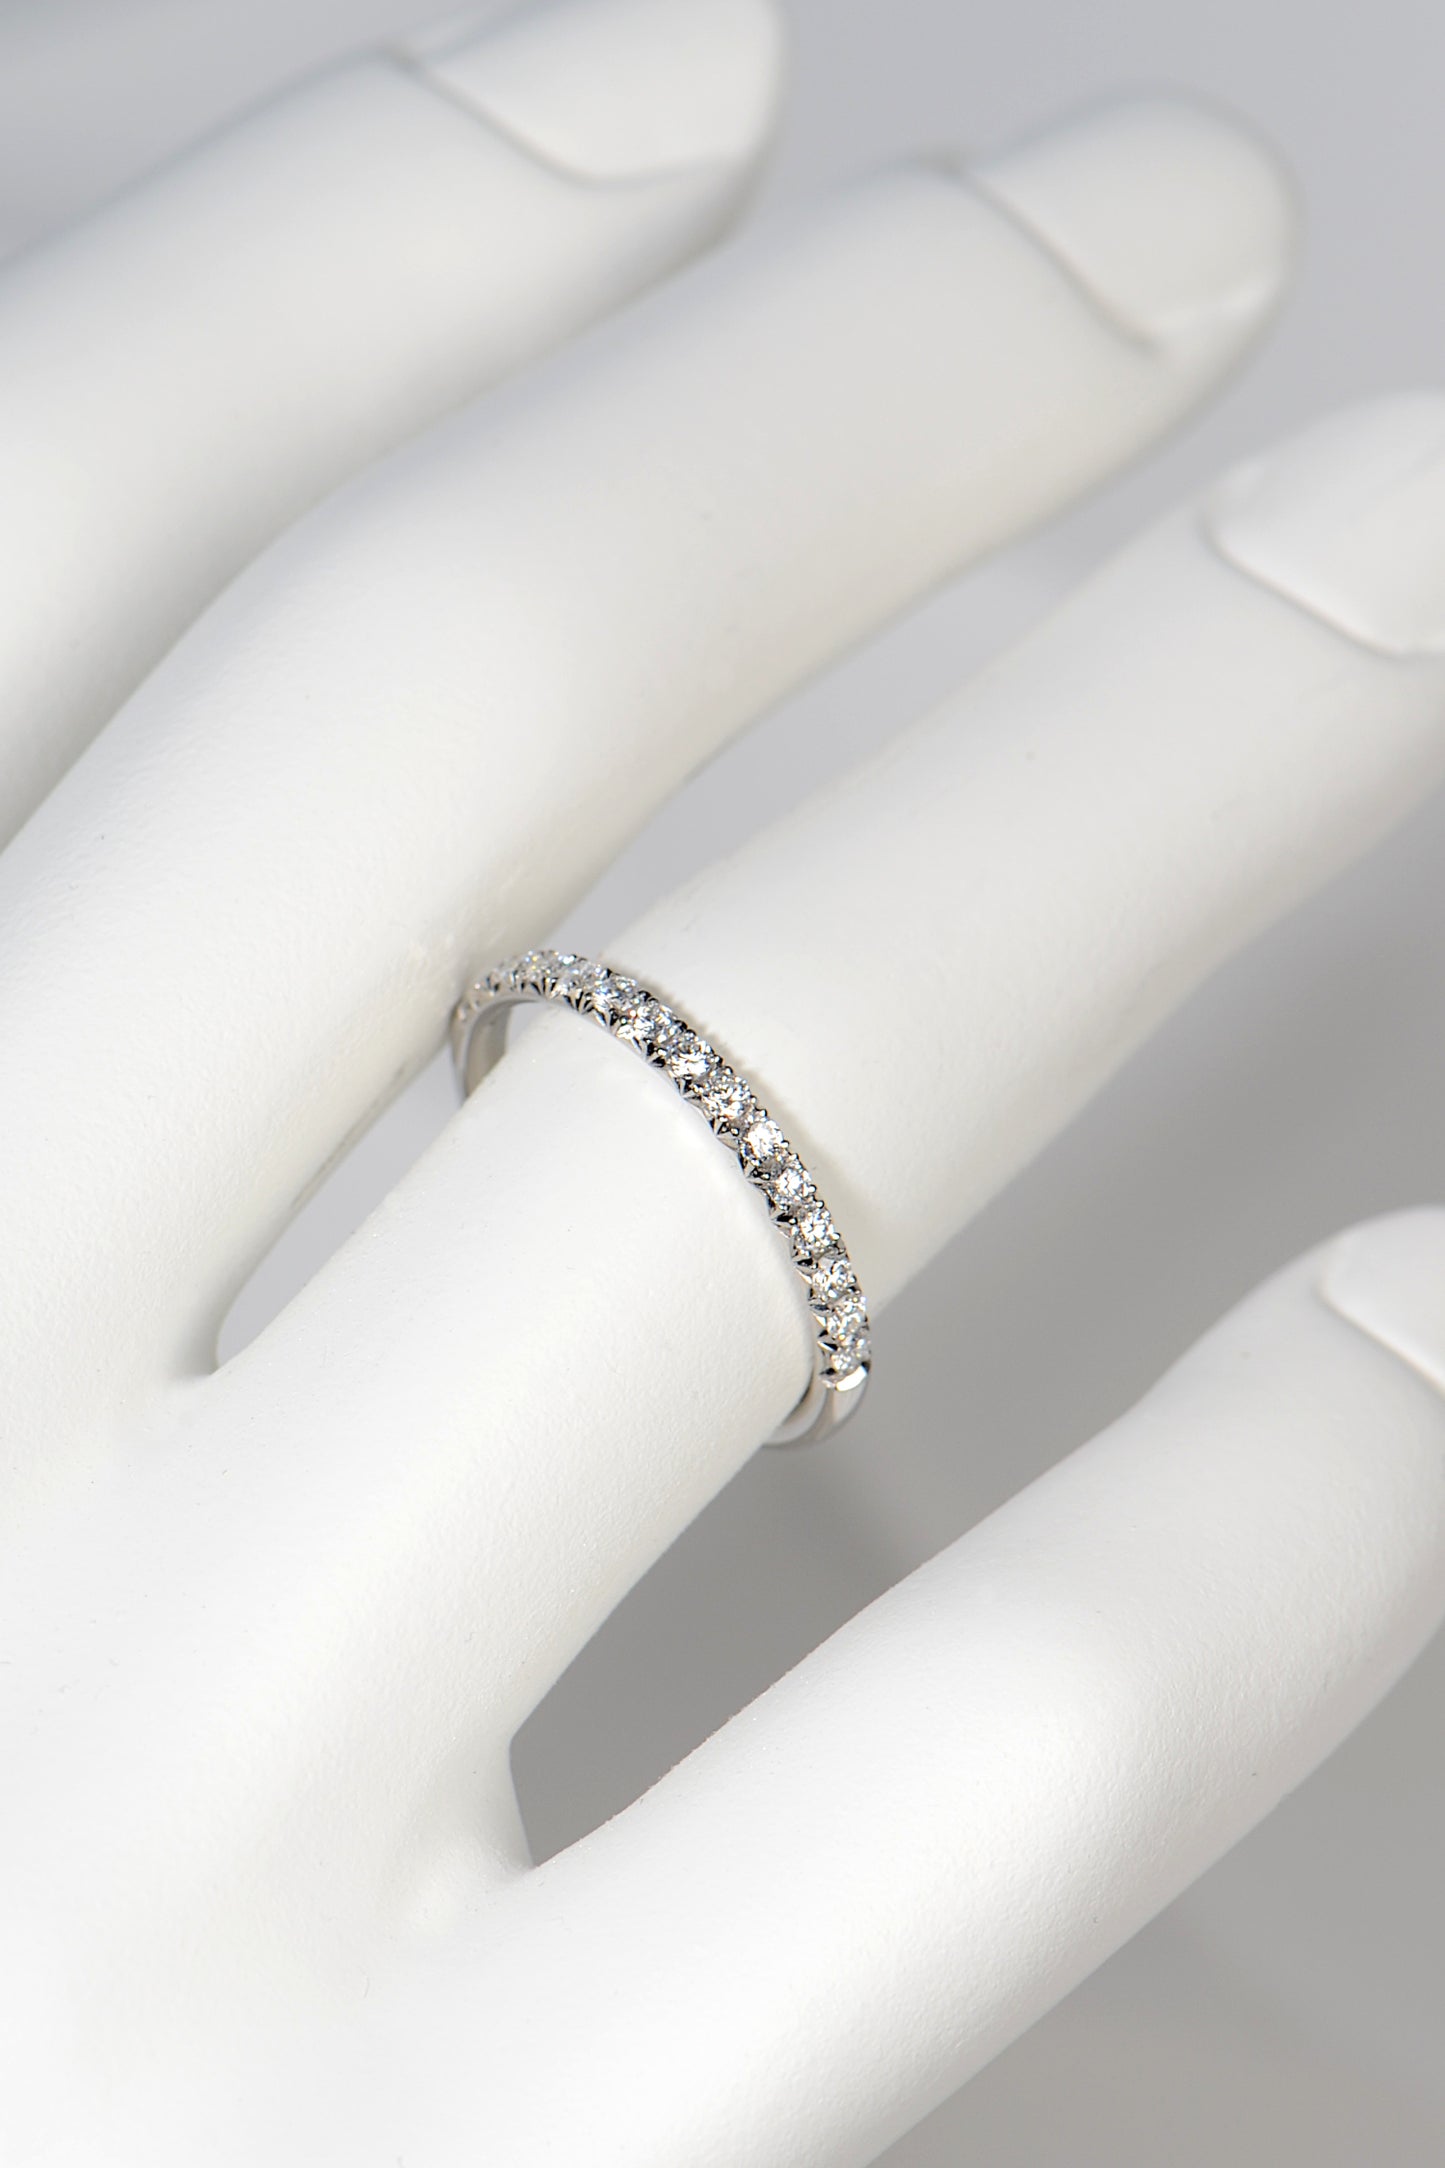 Diamond set eternity or wedding ring with fishtail setting